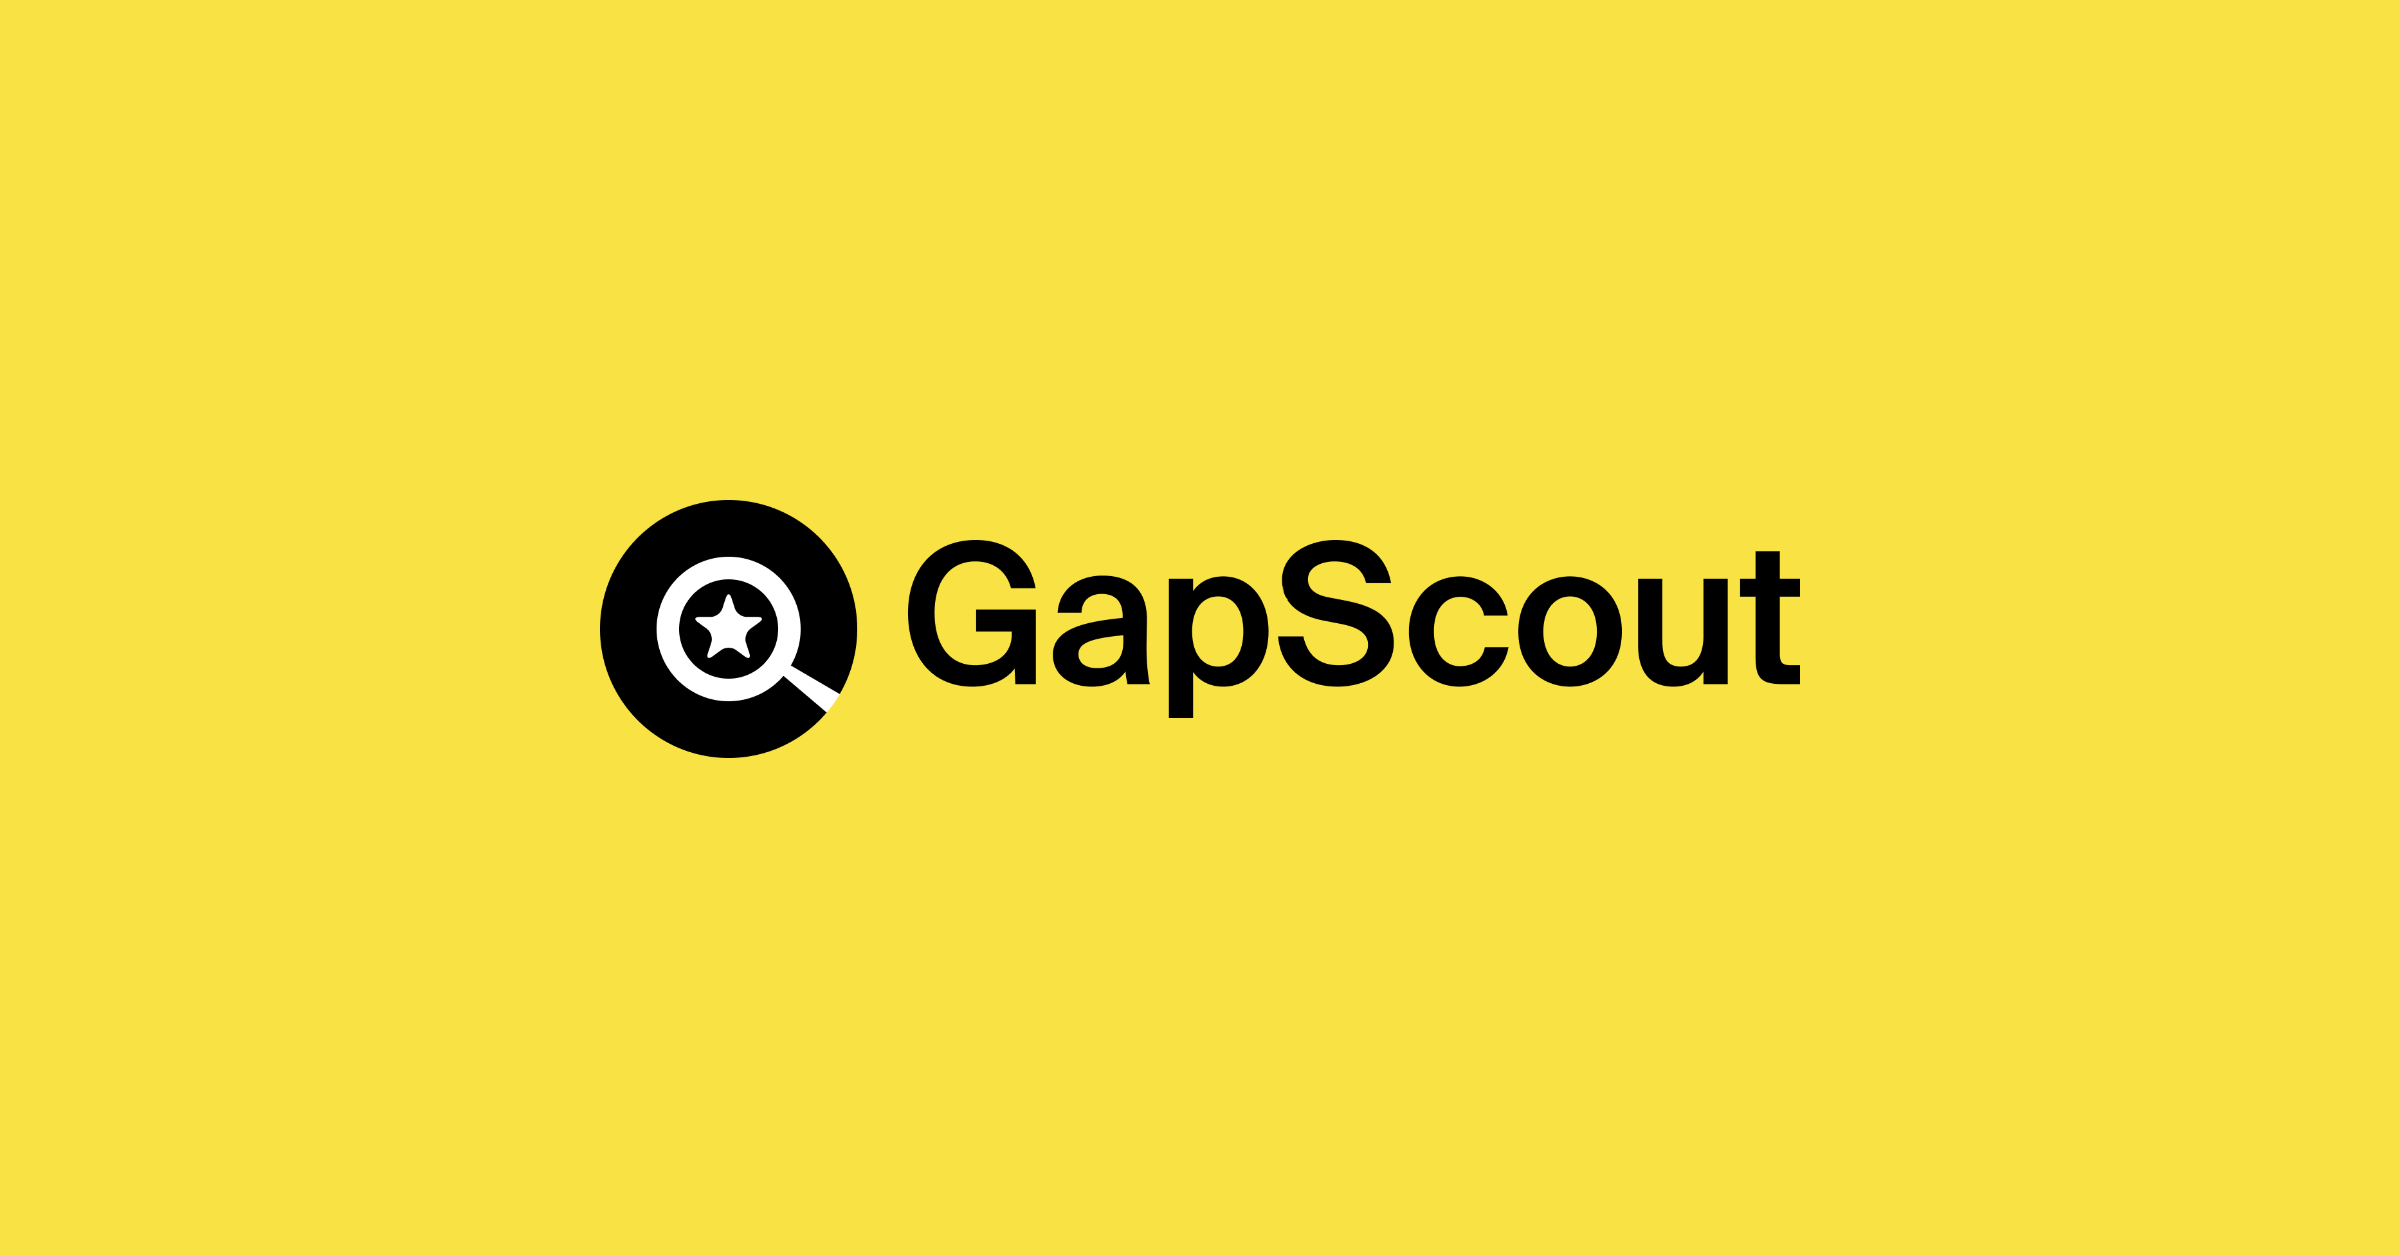 GapScout - A tool to analyze customer reviews